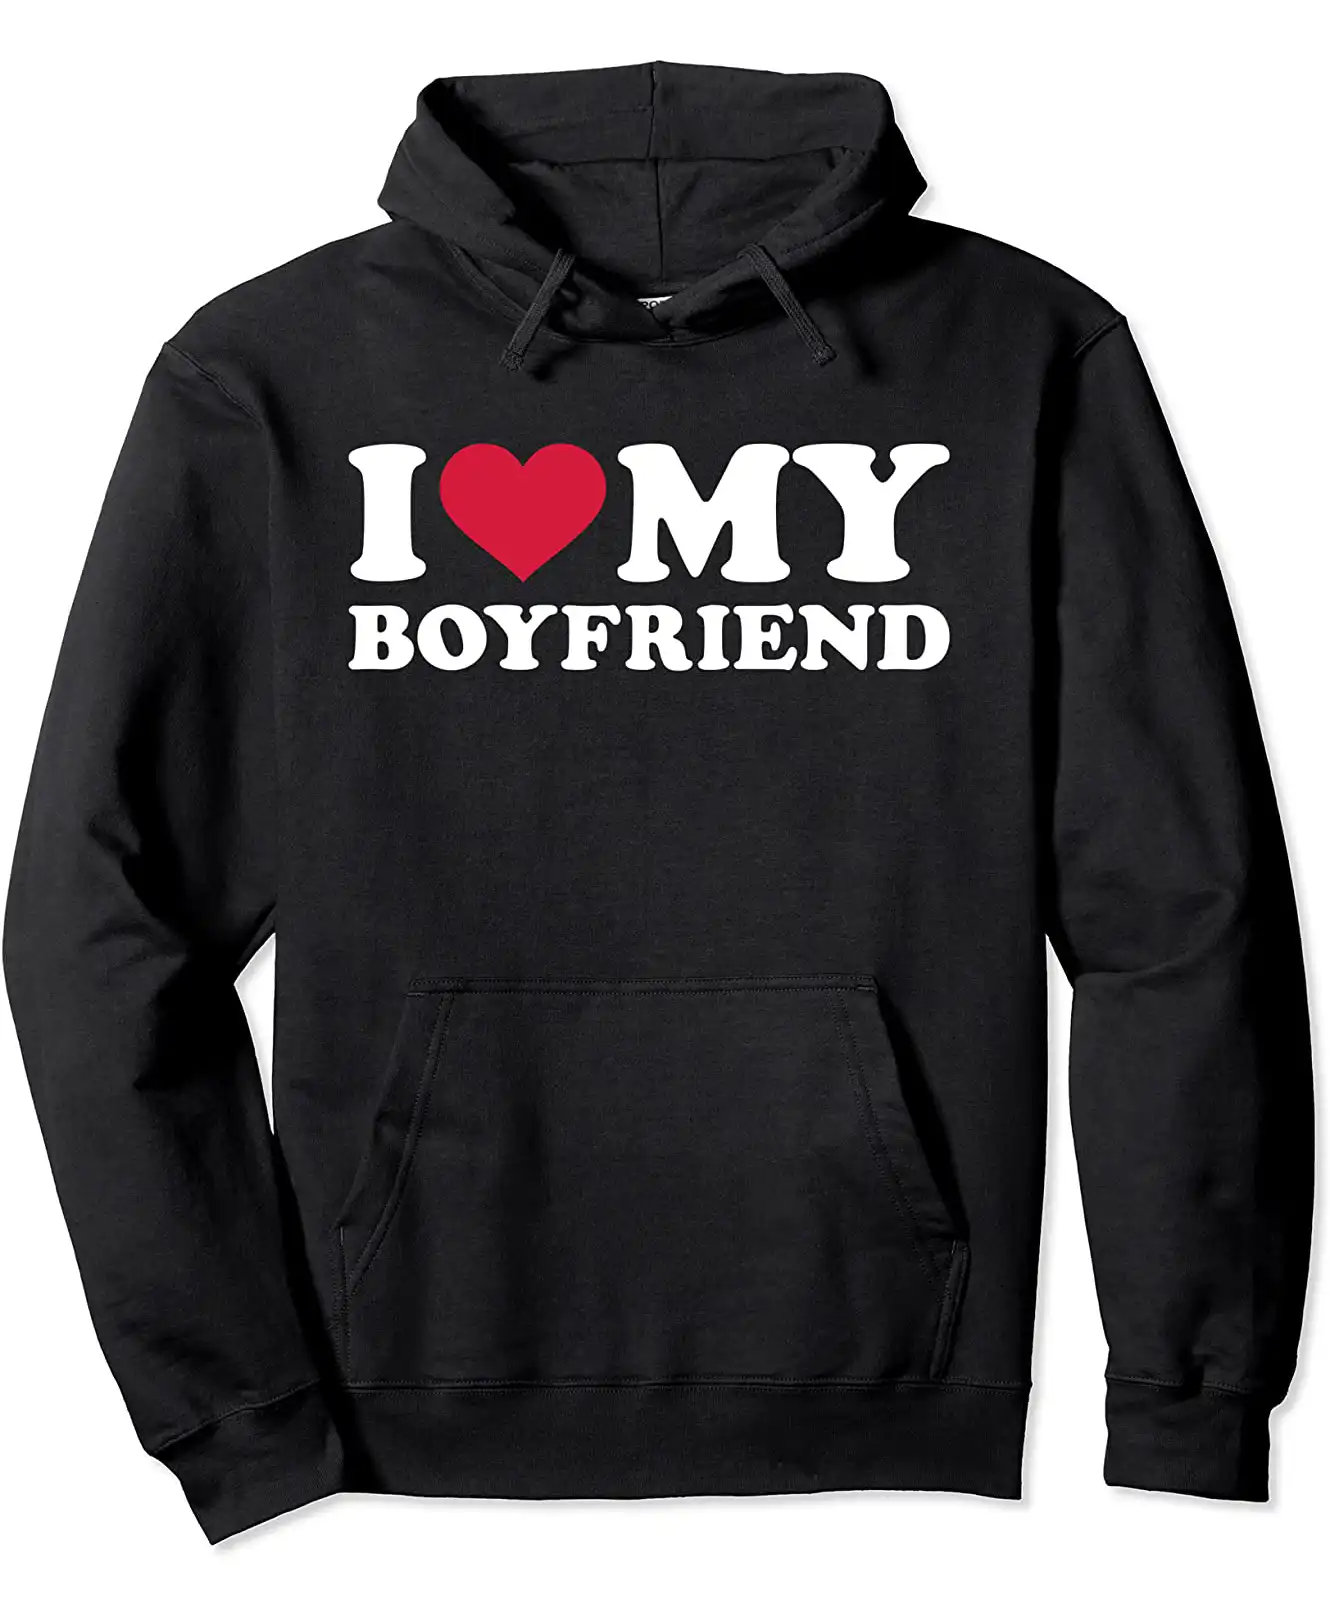 I Love My Boyfriend Hoodie For Sale - William Jacket